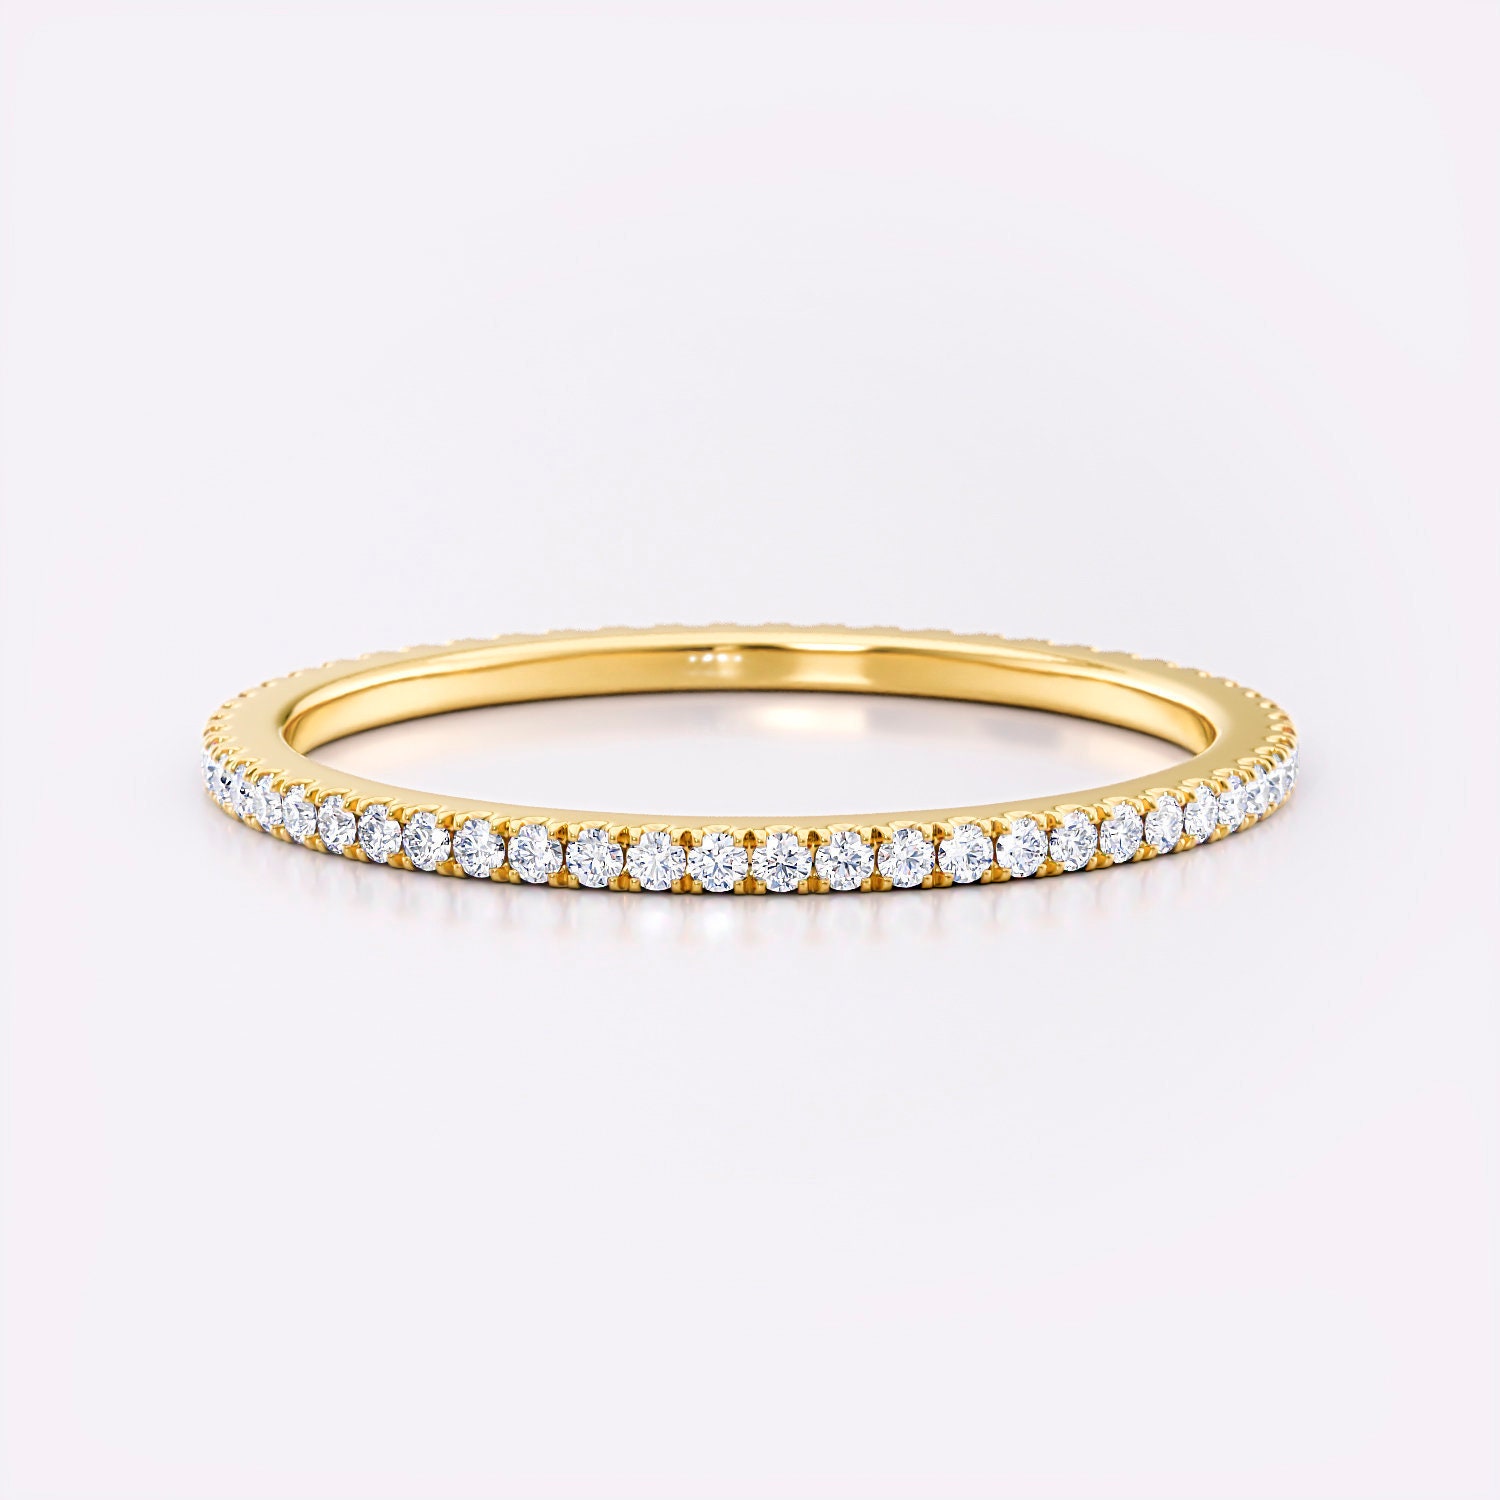 Diamond Band Ring Dainty Minimalist Elegant Eternity White Gold Delicate Handmade Jewelry Thin Infinity Christmas Gift Her